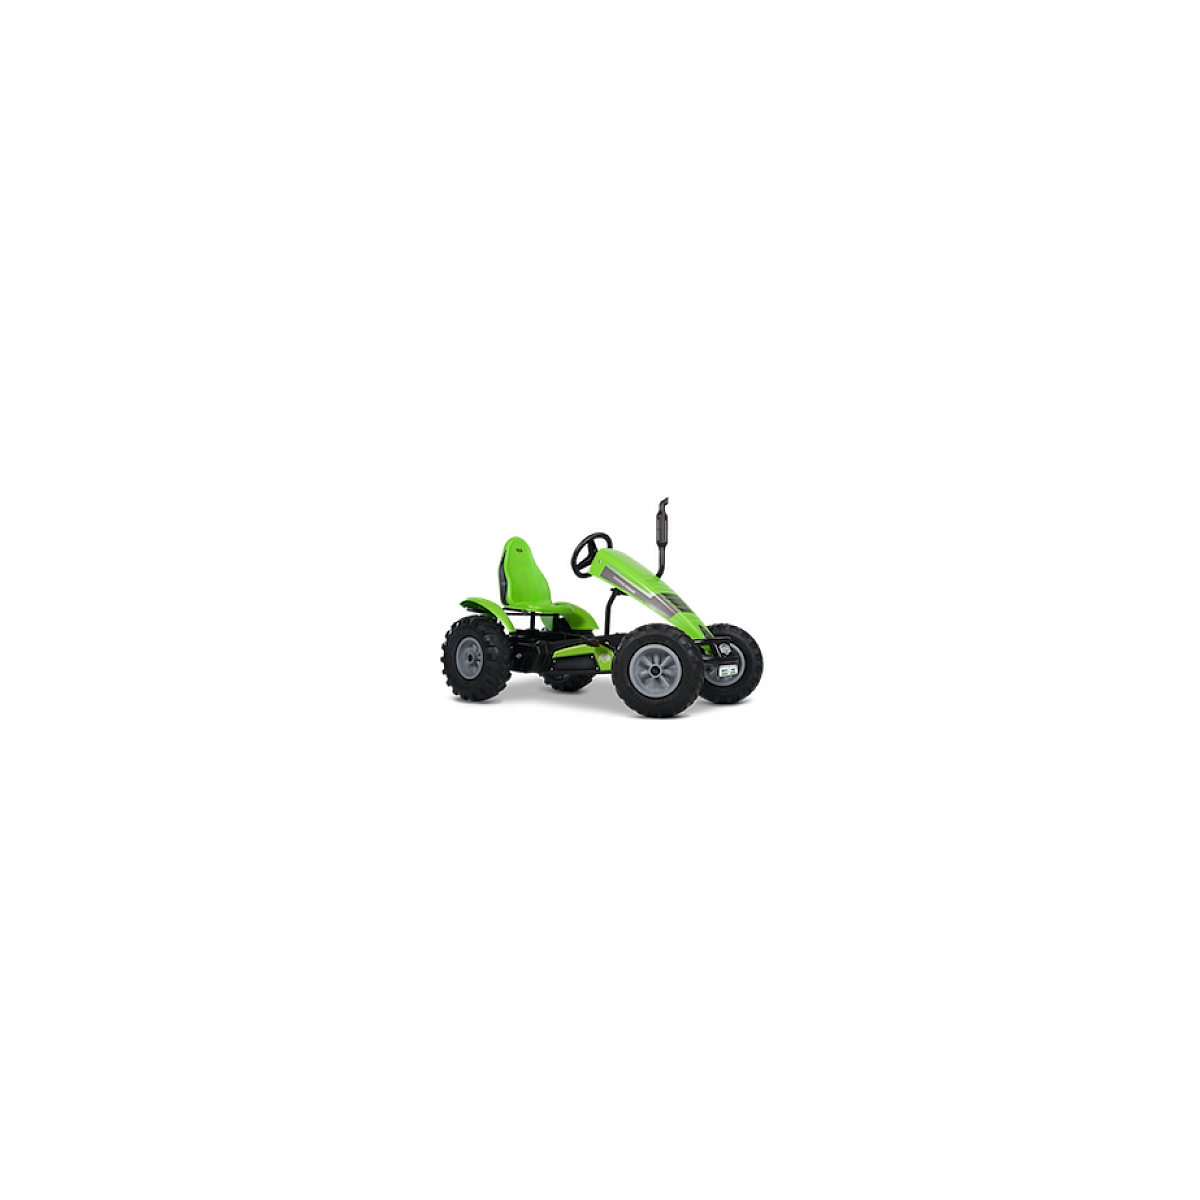 Kart a pedales xl  deutz fahr bfr green